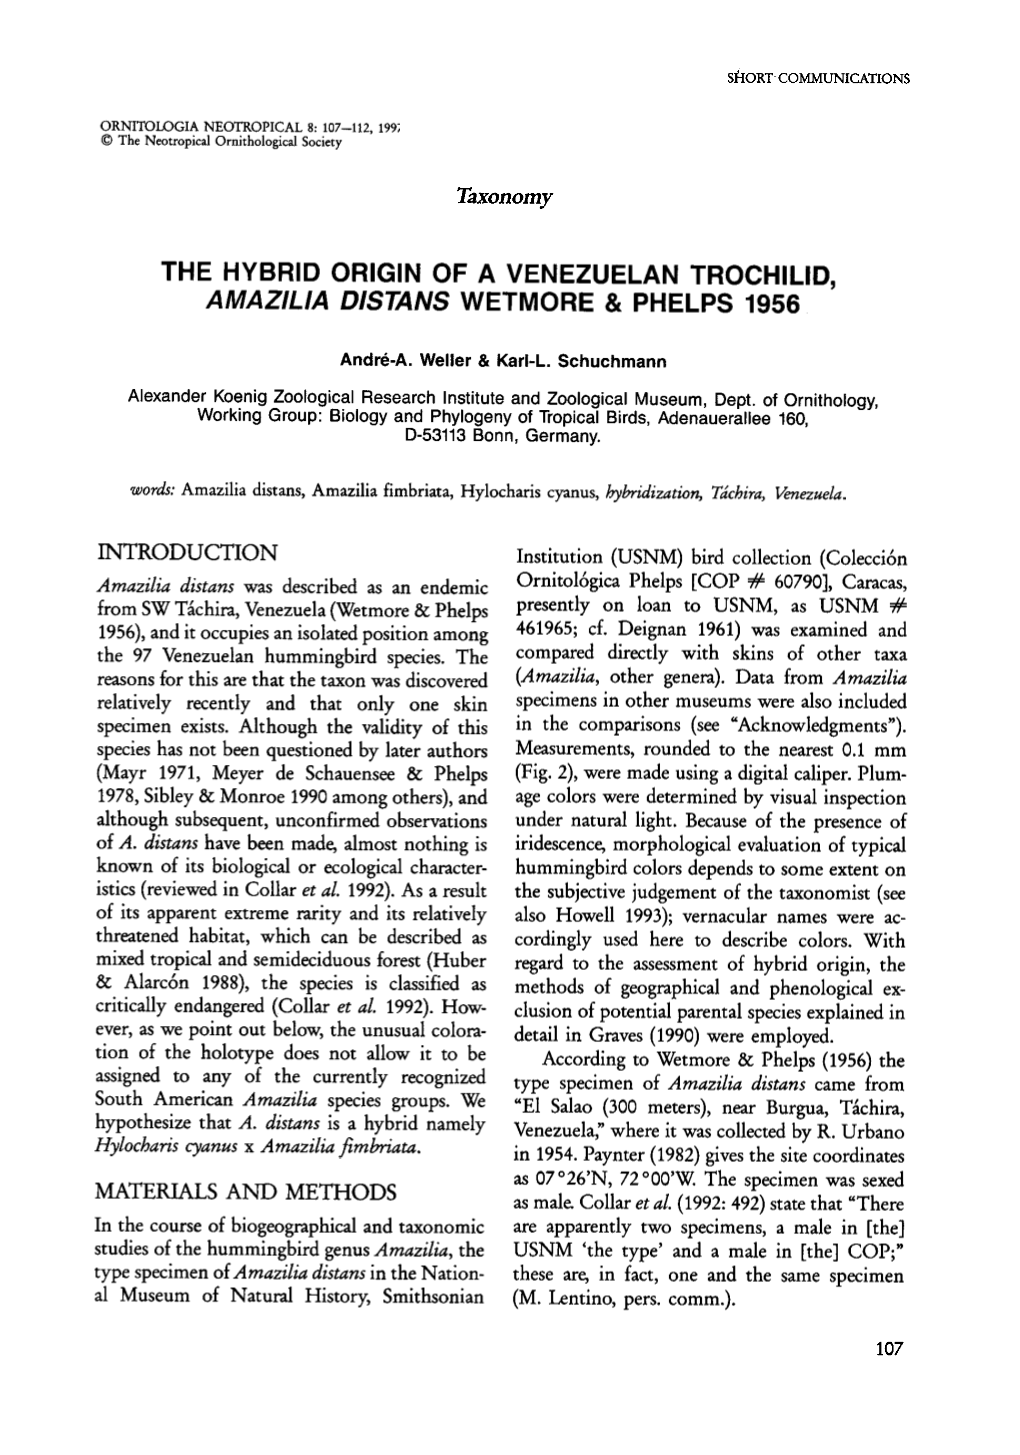 THE HYBRID ORIGIN of a VENEZUELAN Trochllid, AMAZILIA DISTANS WETMORE & PHELPS 1956